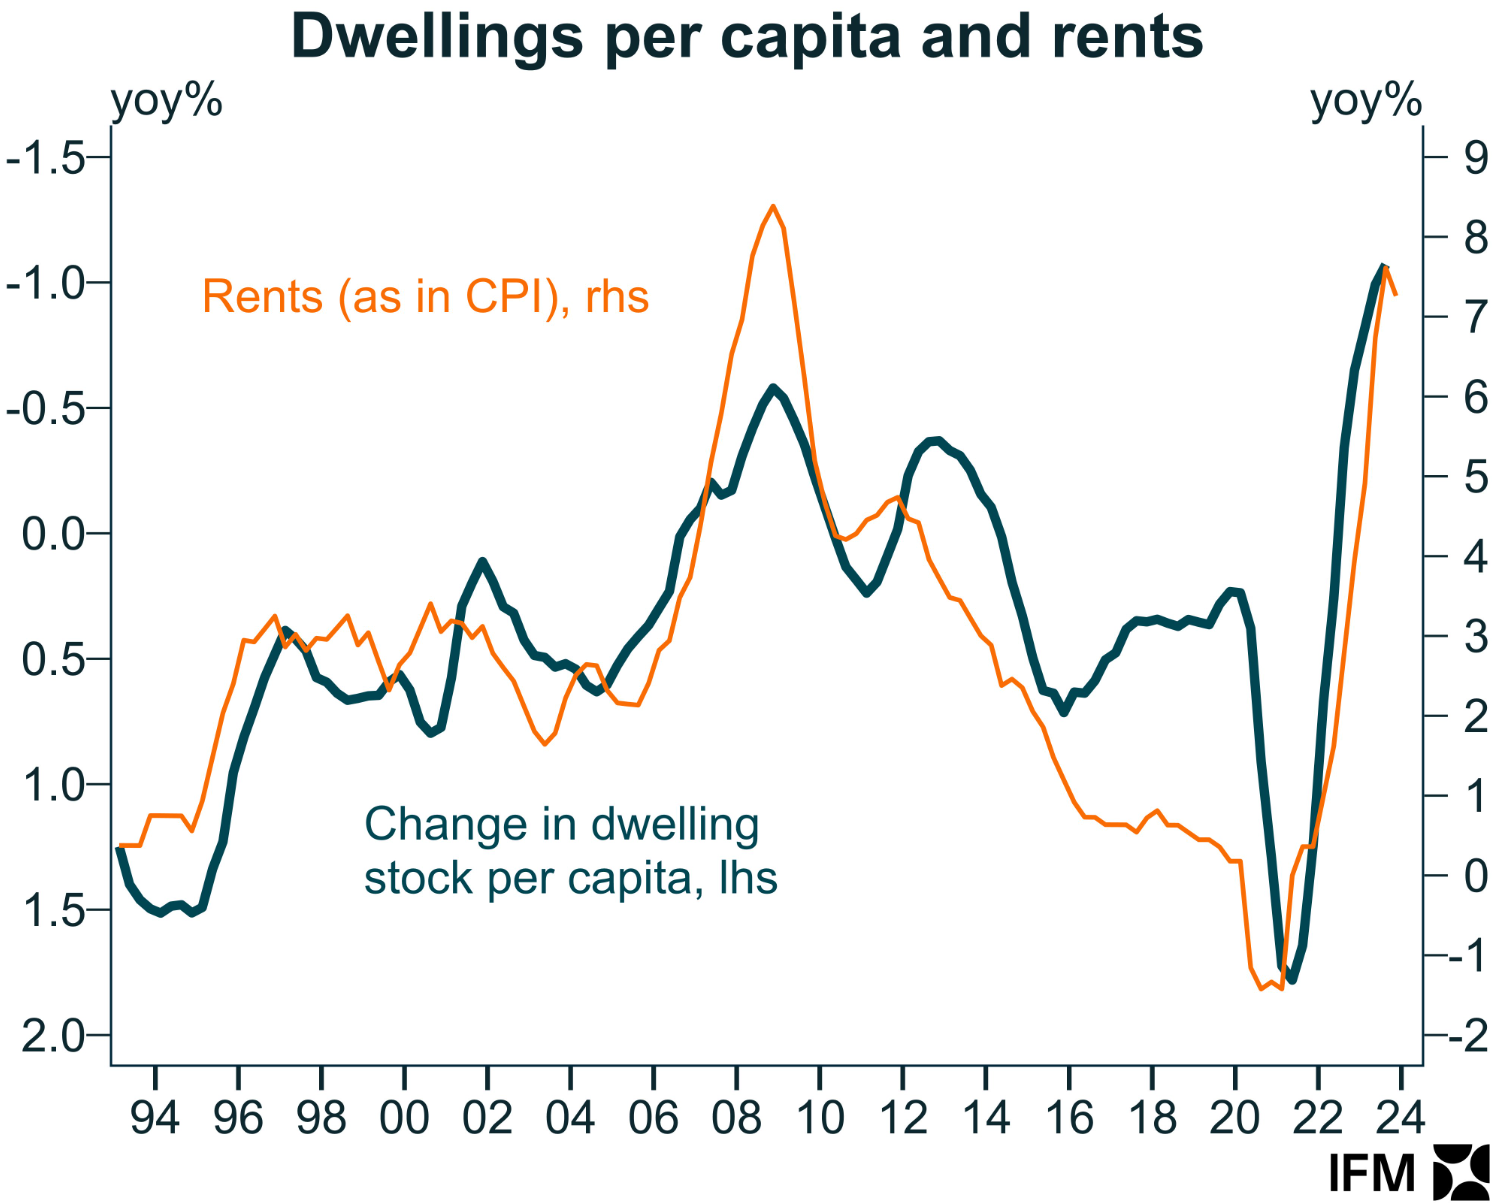 Per capita dwellings and rents